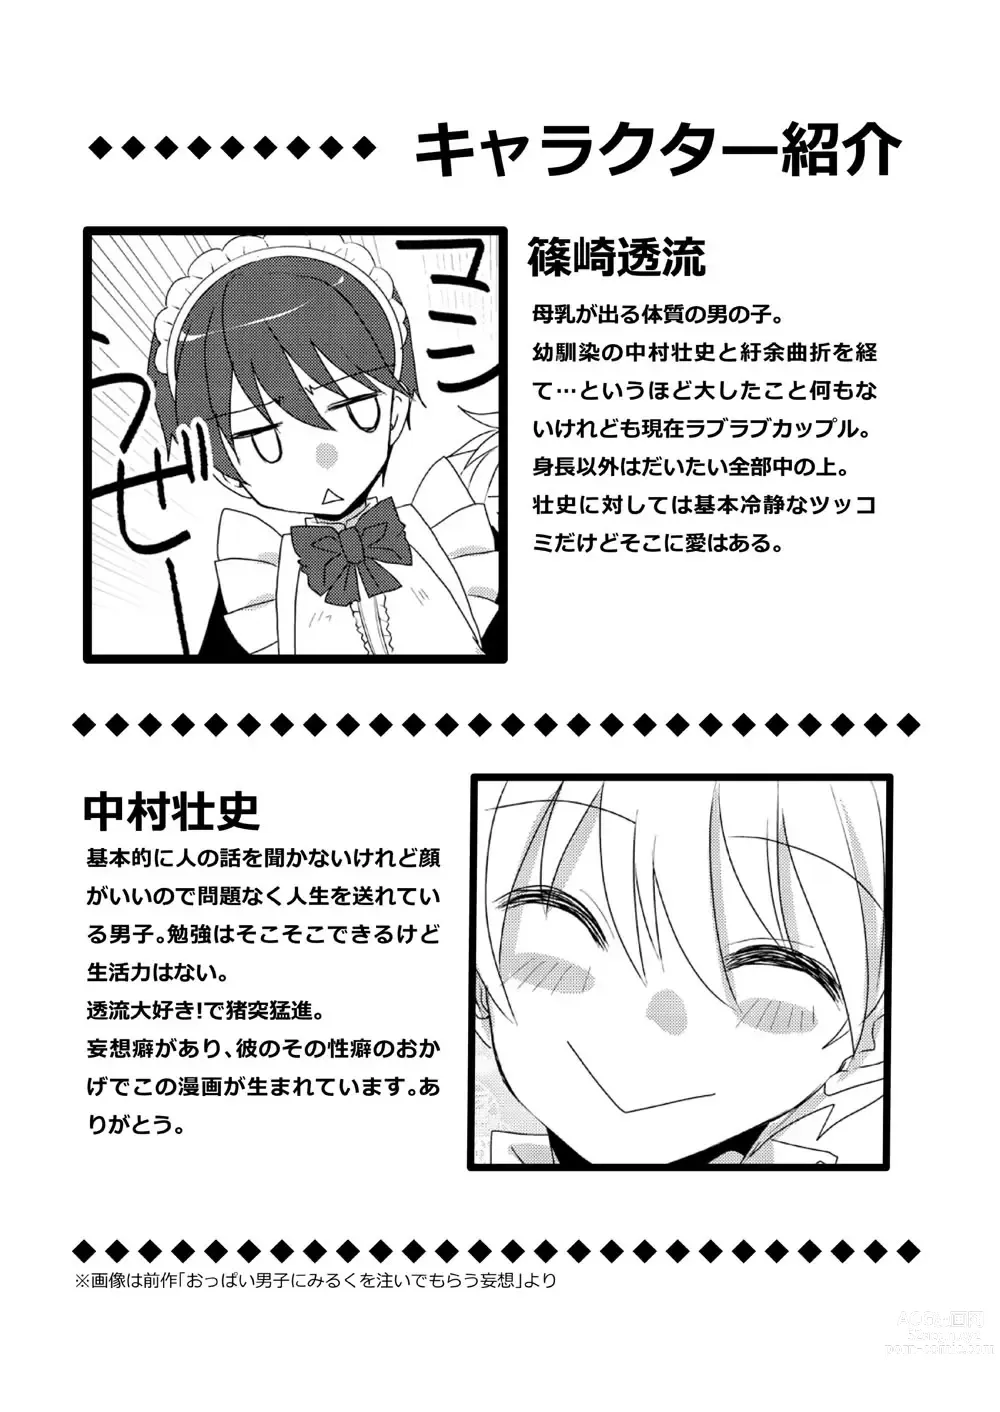 Page 3 of doujinshi Oppai  Danshi ga  Nan no Myakuraku mo Naku  Shokushu ni  Osowareru Mousou